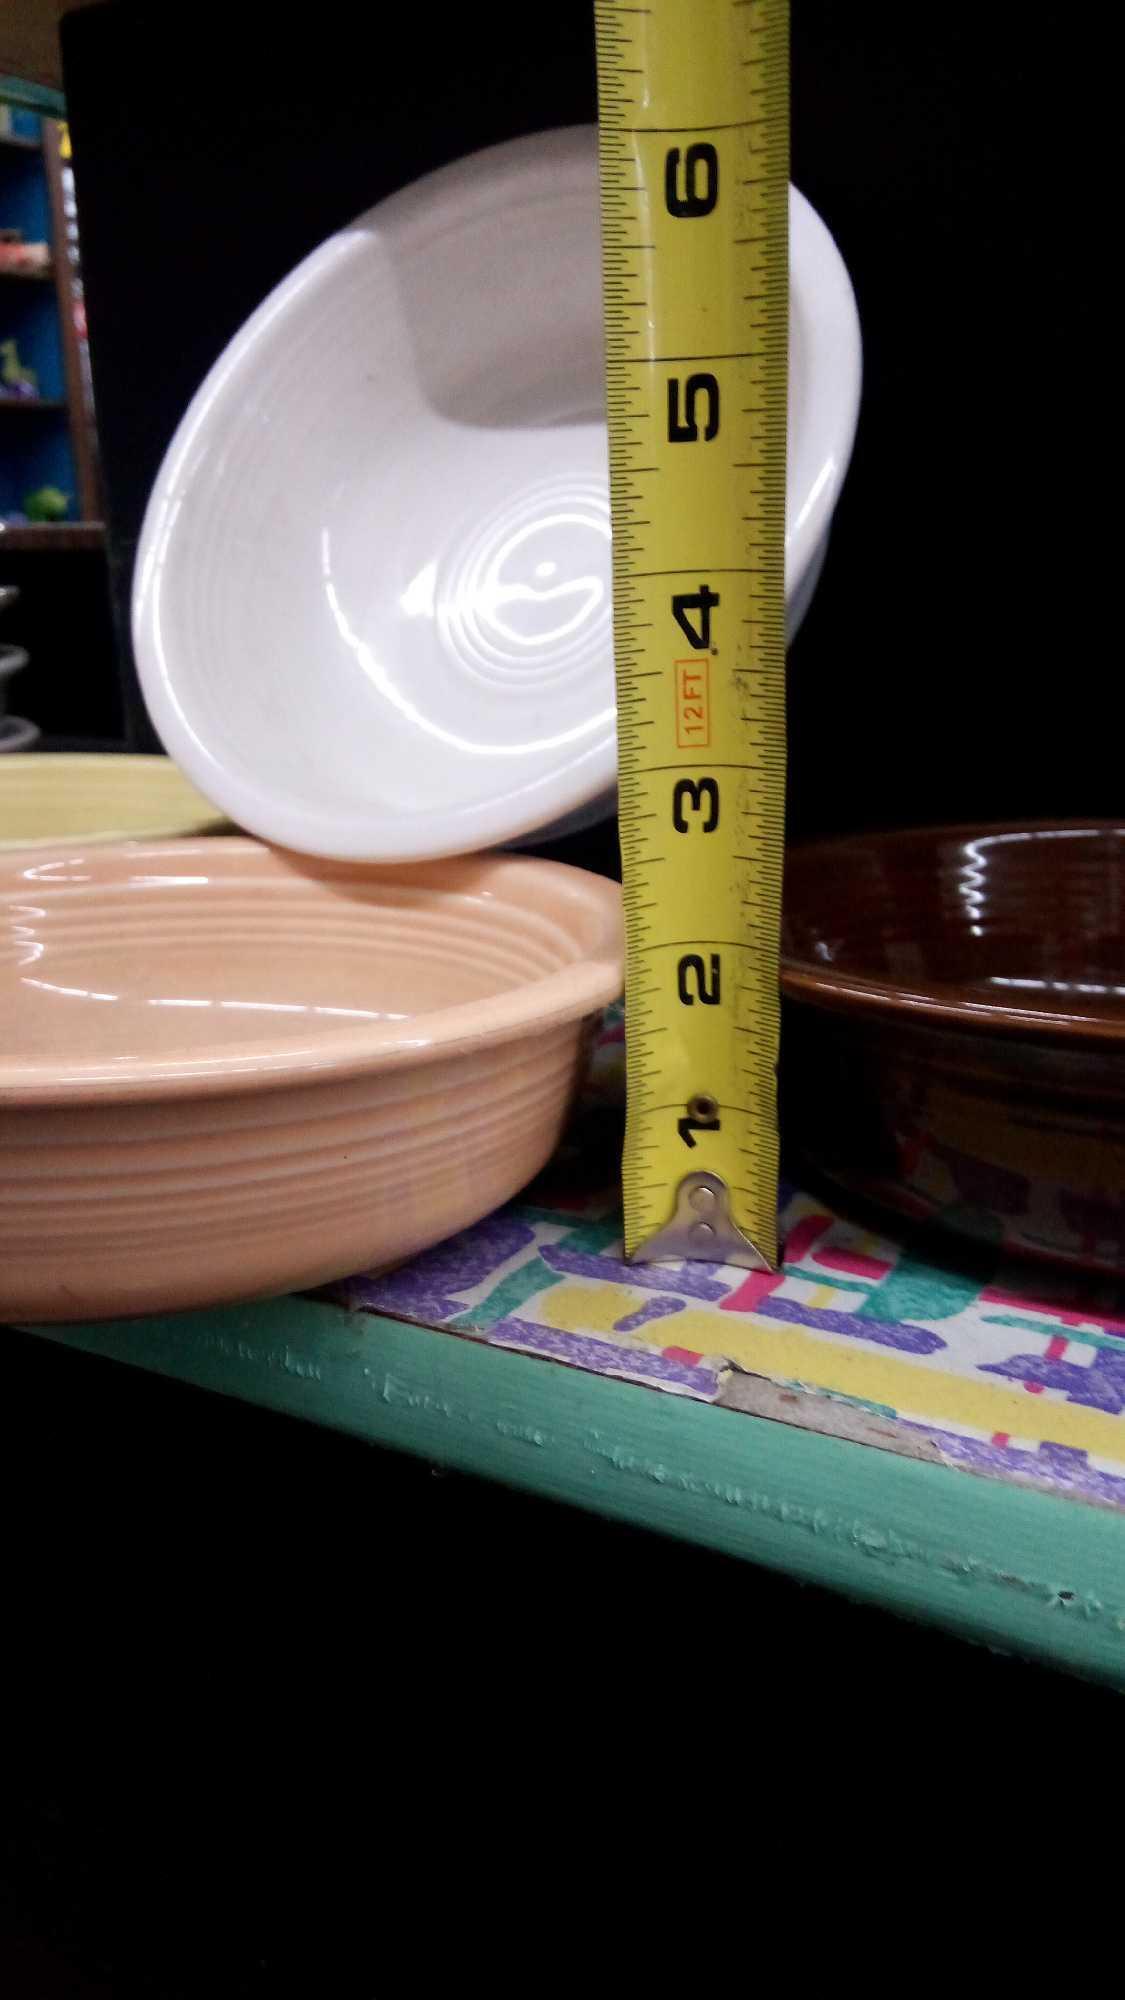 (4) Fiesta Dinnerware 7" Bowls, Warm Colors, Chocolate Brown, white, peach